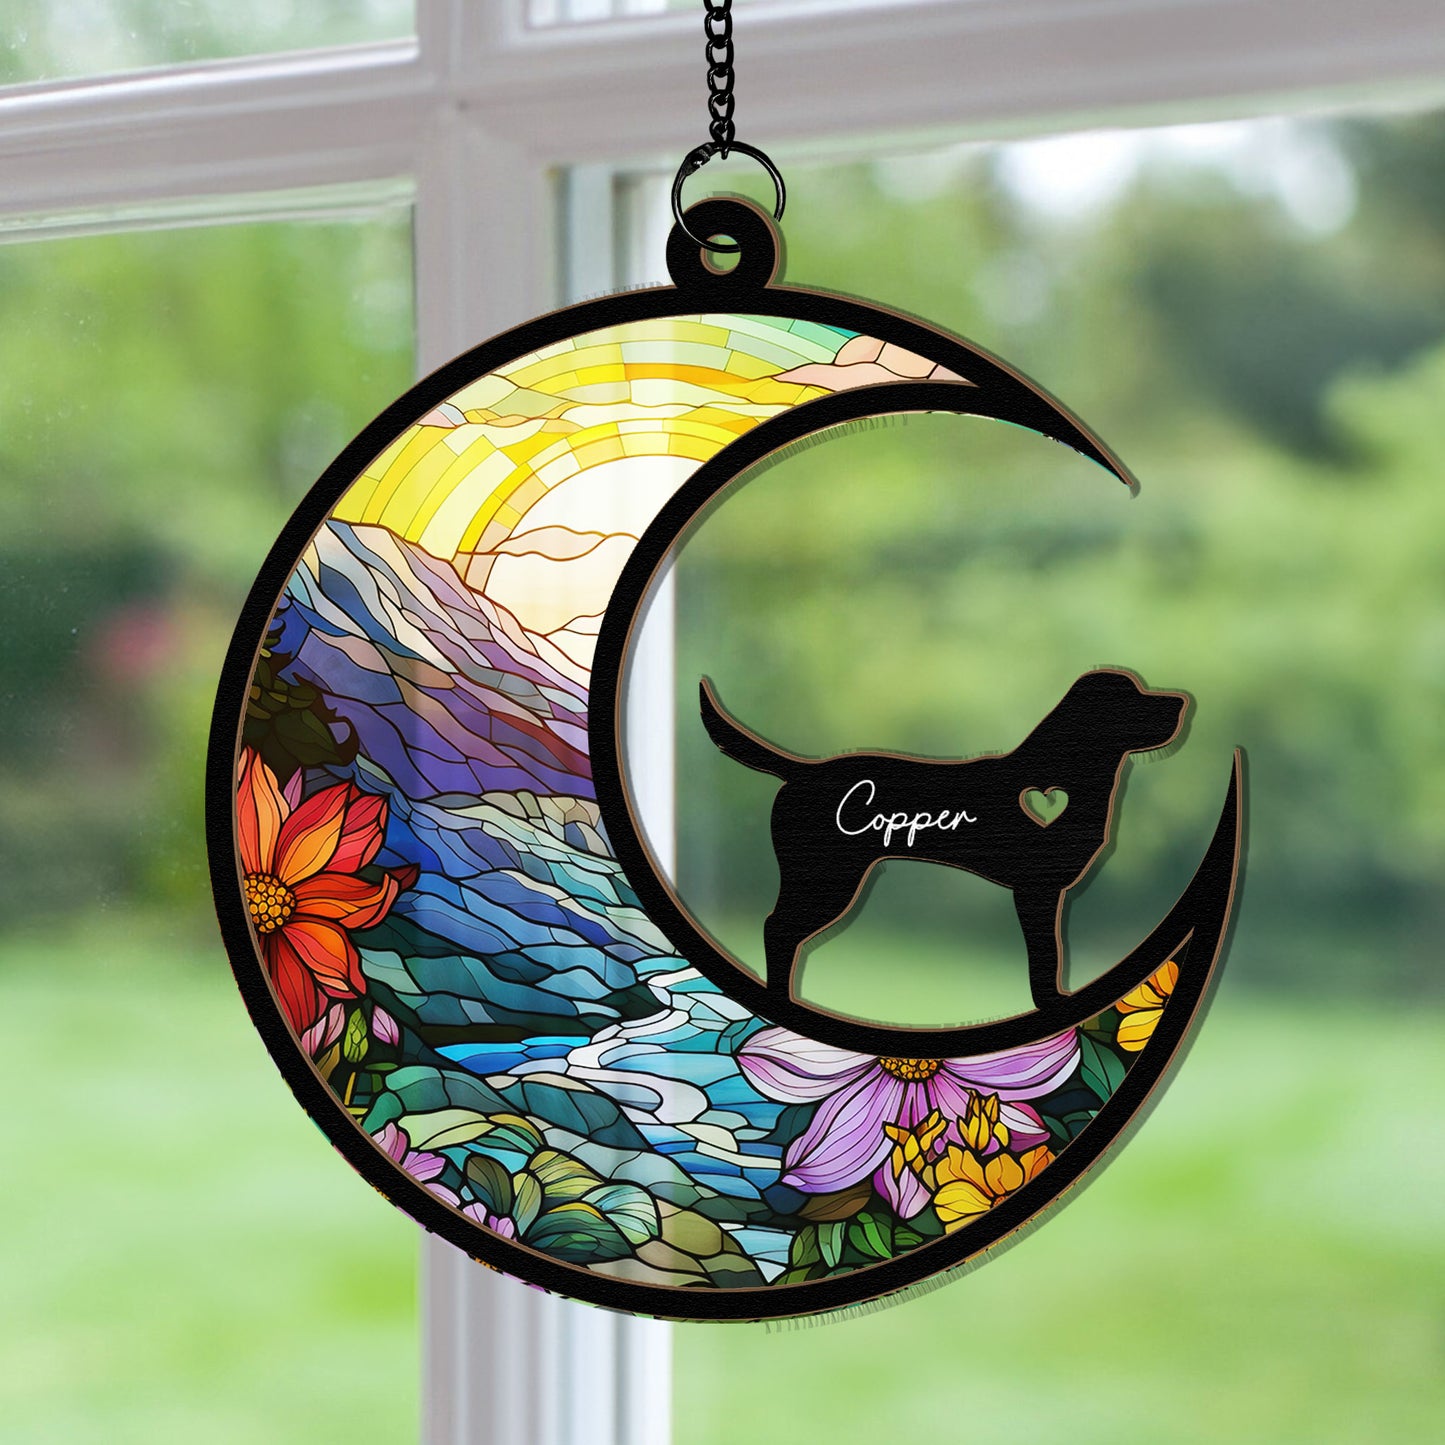 Pet Loss - Personalized Window Hanging Suncatcher Ornament